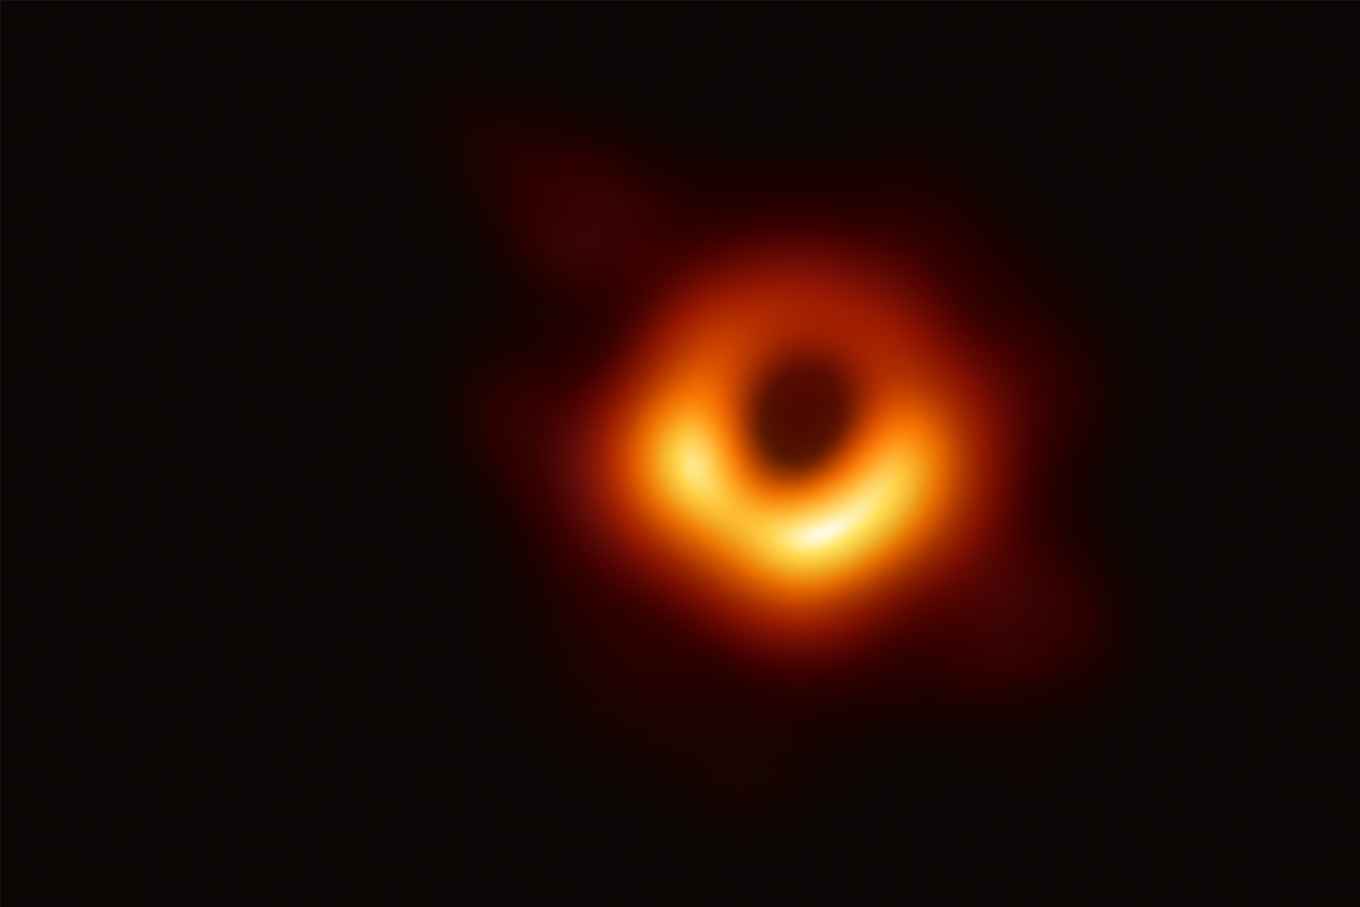 Black hole. Image: Event Horizon Telescope